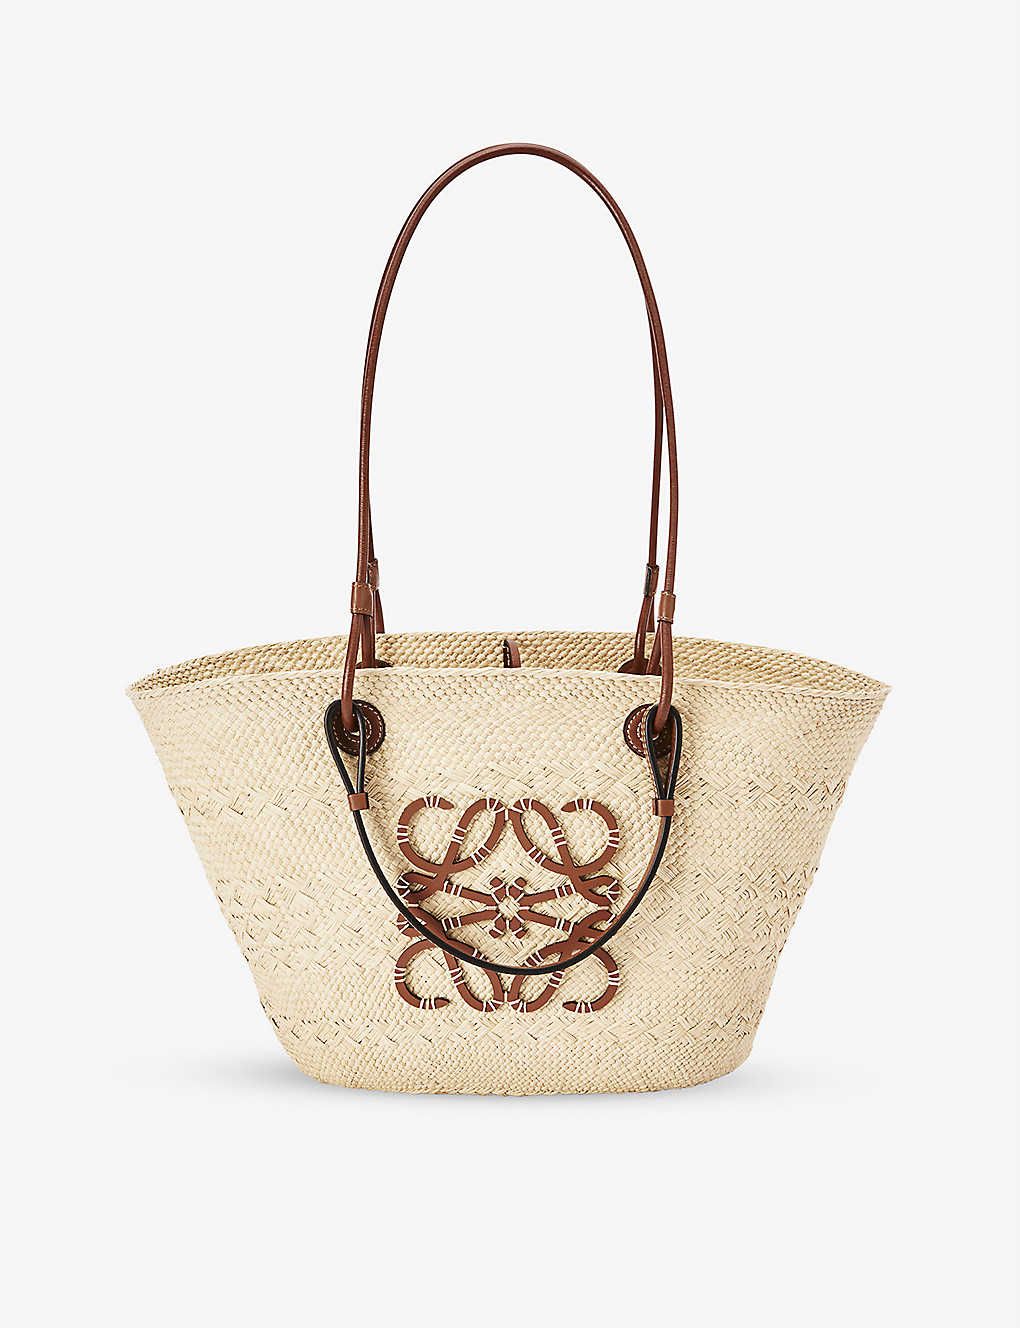 LOEWE
          
          Anagram iraca palm and leather basket bag | Selfridges